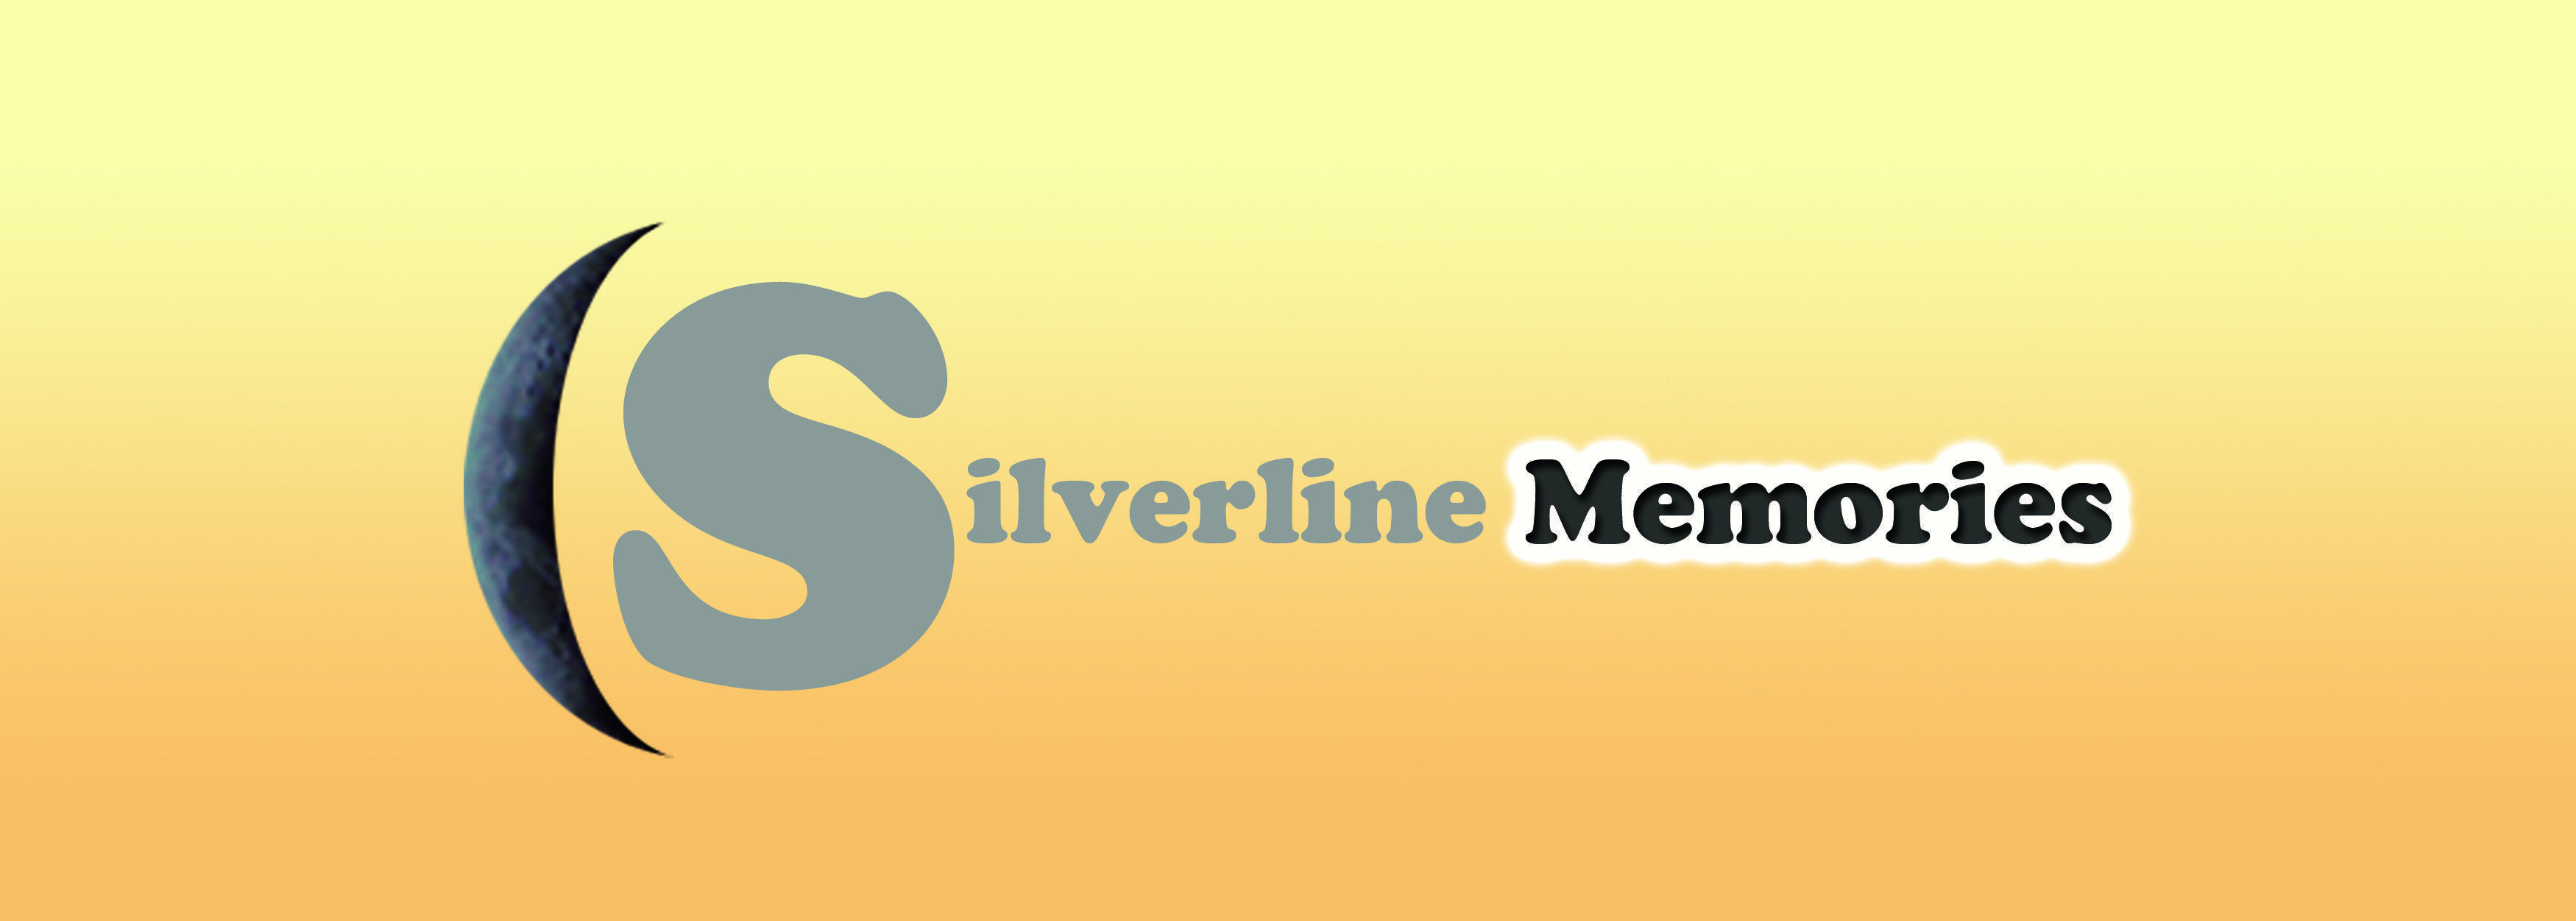 Silverline Logo - Silverline Logo (2)